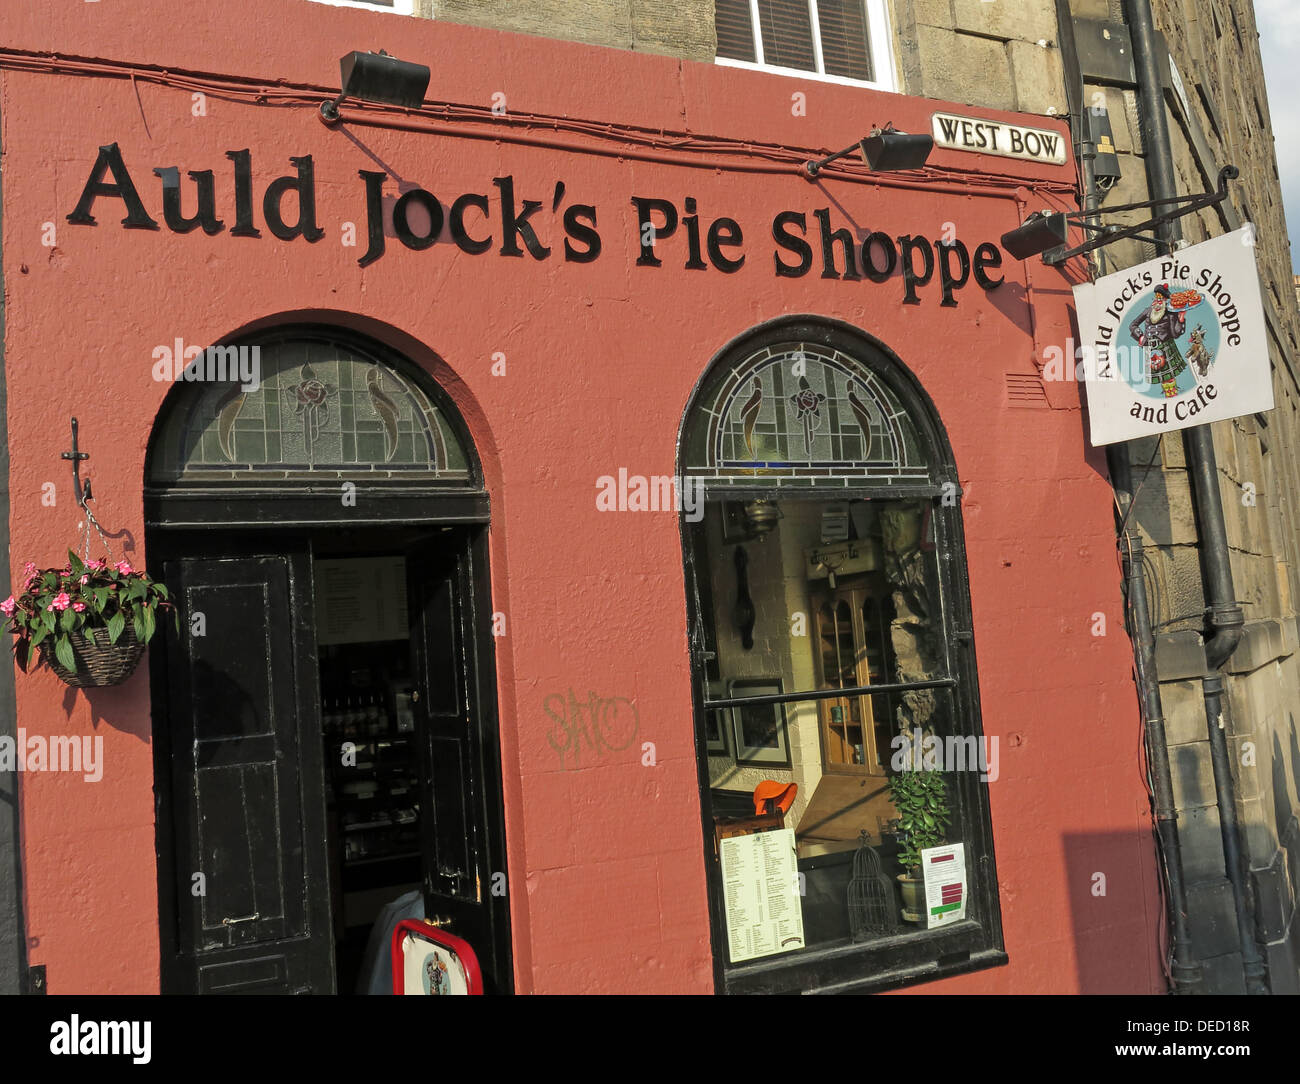 Auld Jocks Pie shoppe, West Bow, Top of Grassmarket, Edinburgh, Scotland, UK Stock Photo